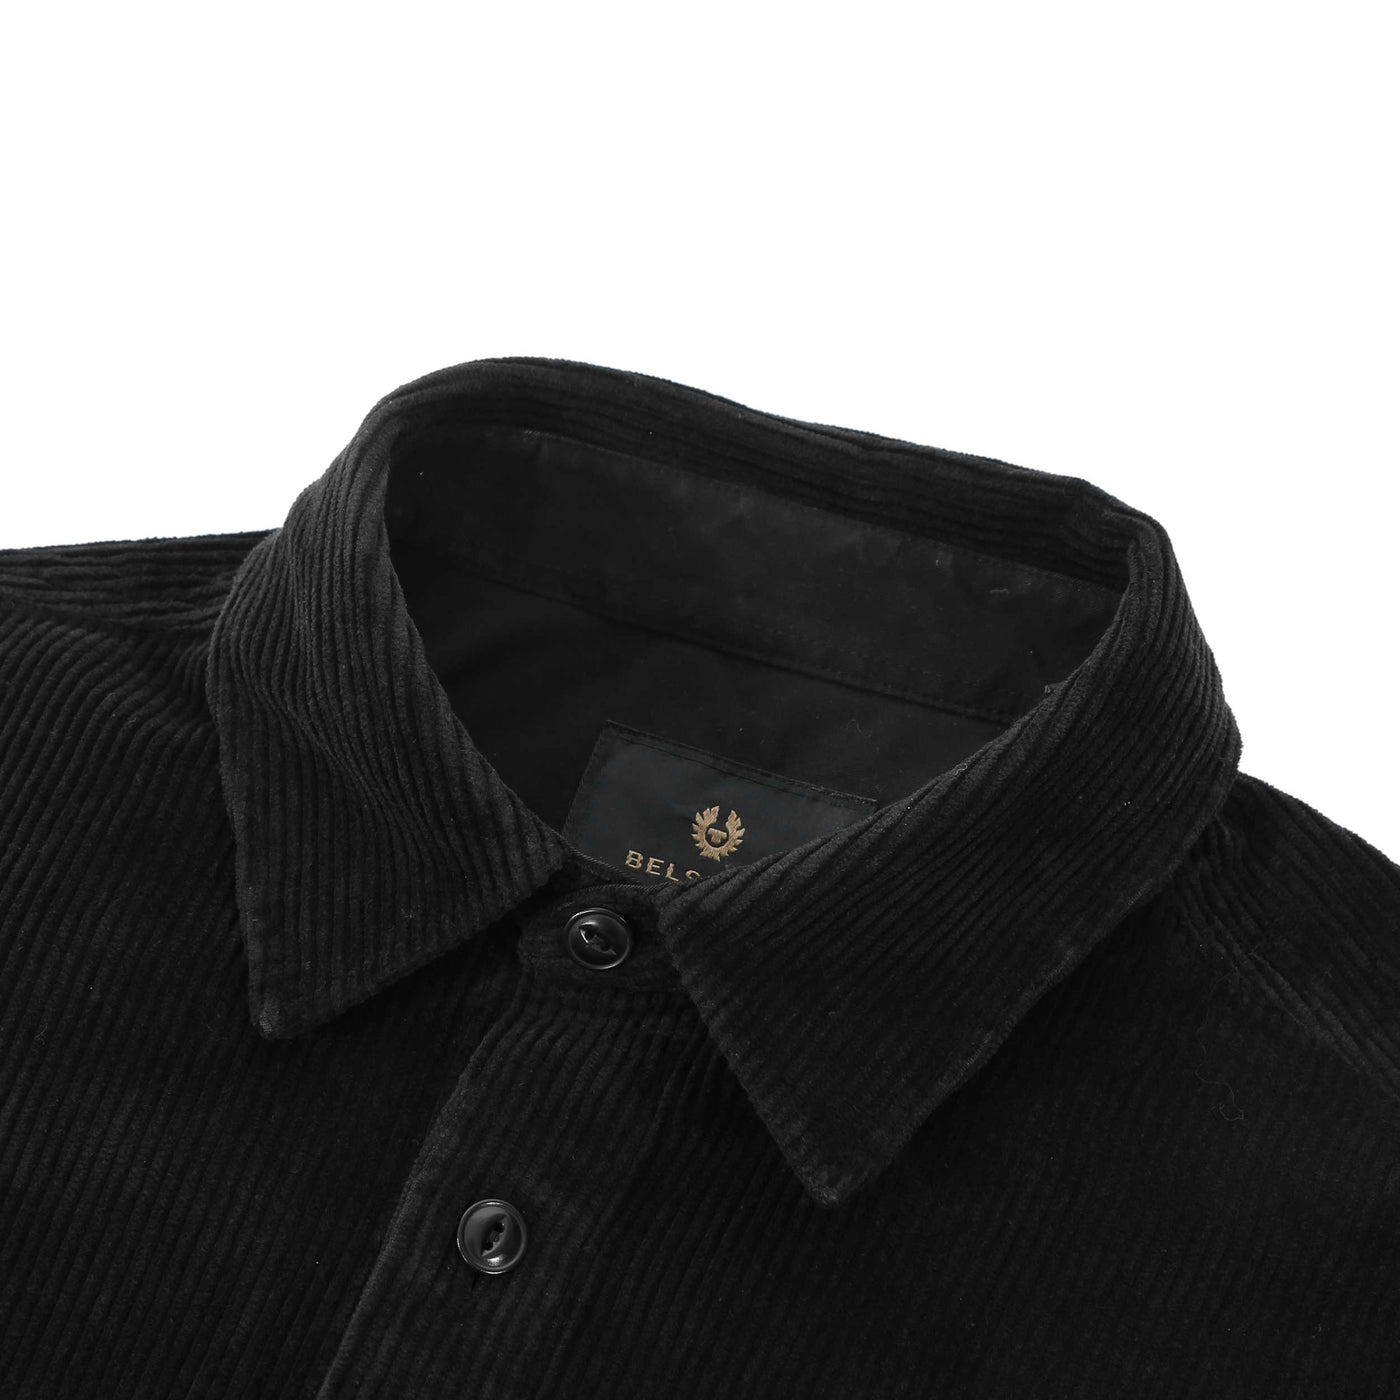 Belstaff Fallgate Shirt in Black Collar